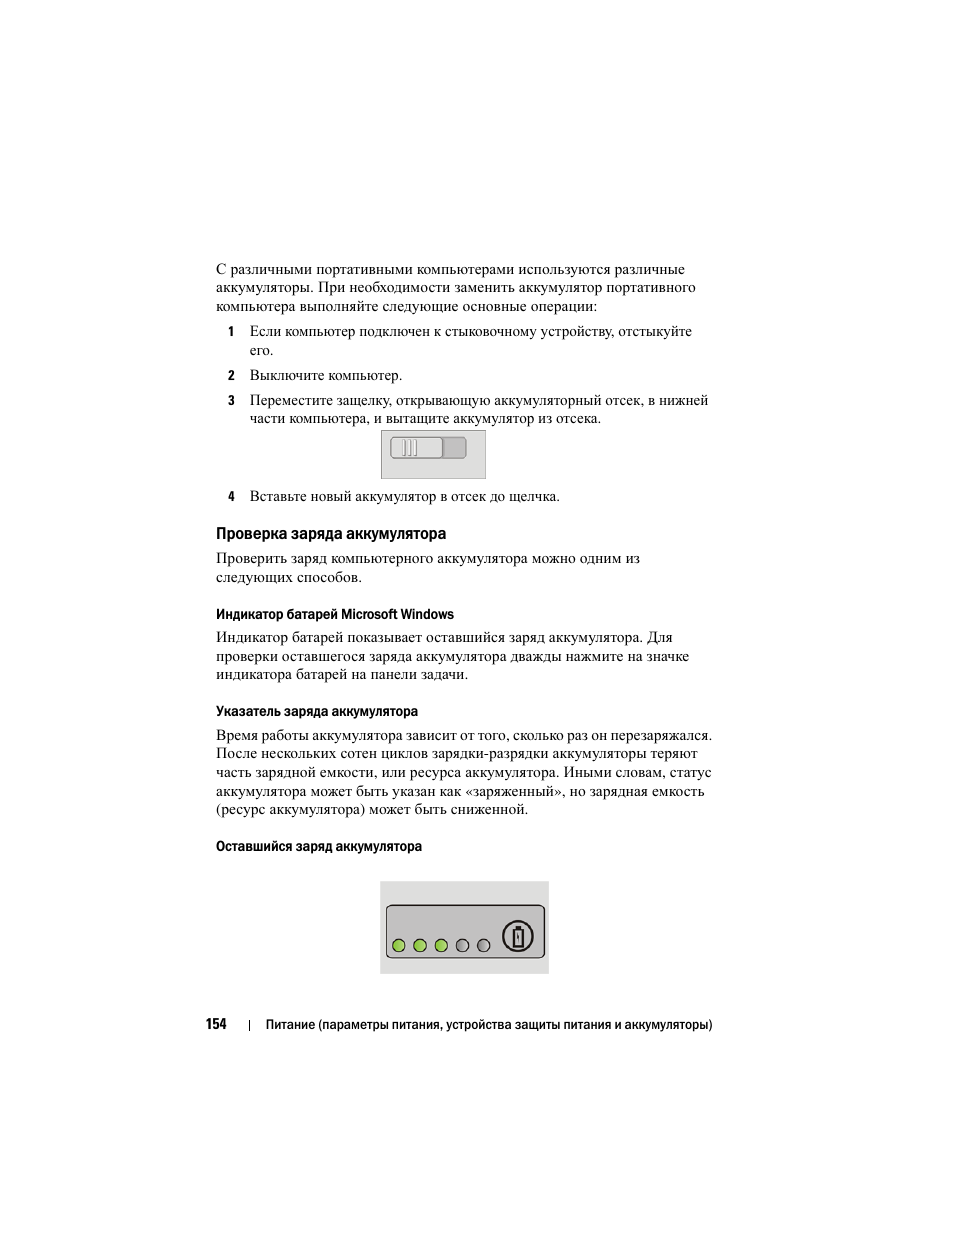 Проверка заряда аккумулятора | Инструкция по эксплуатации Dell Inspiron 560 | Страница 154 / 384